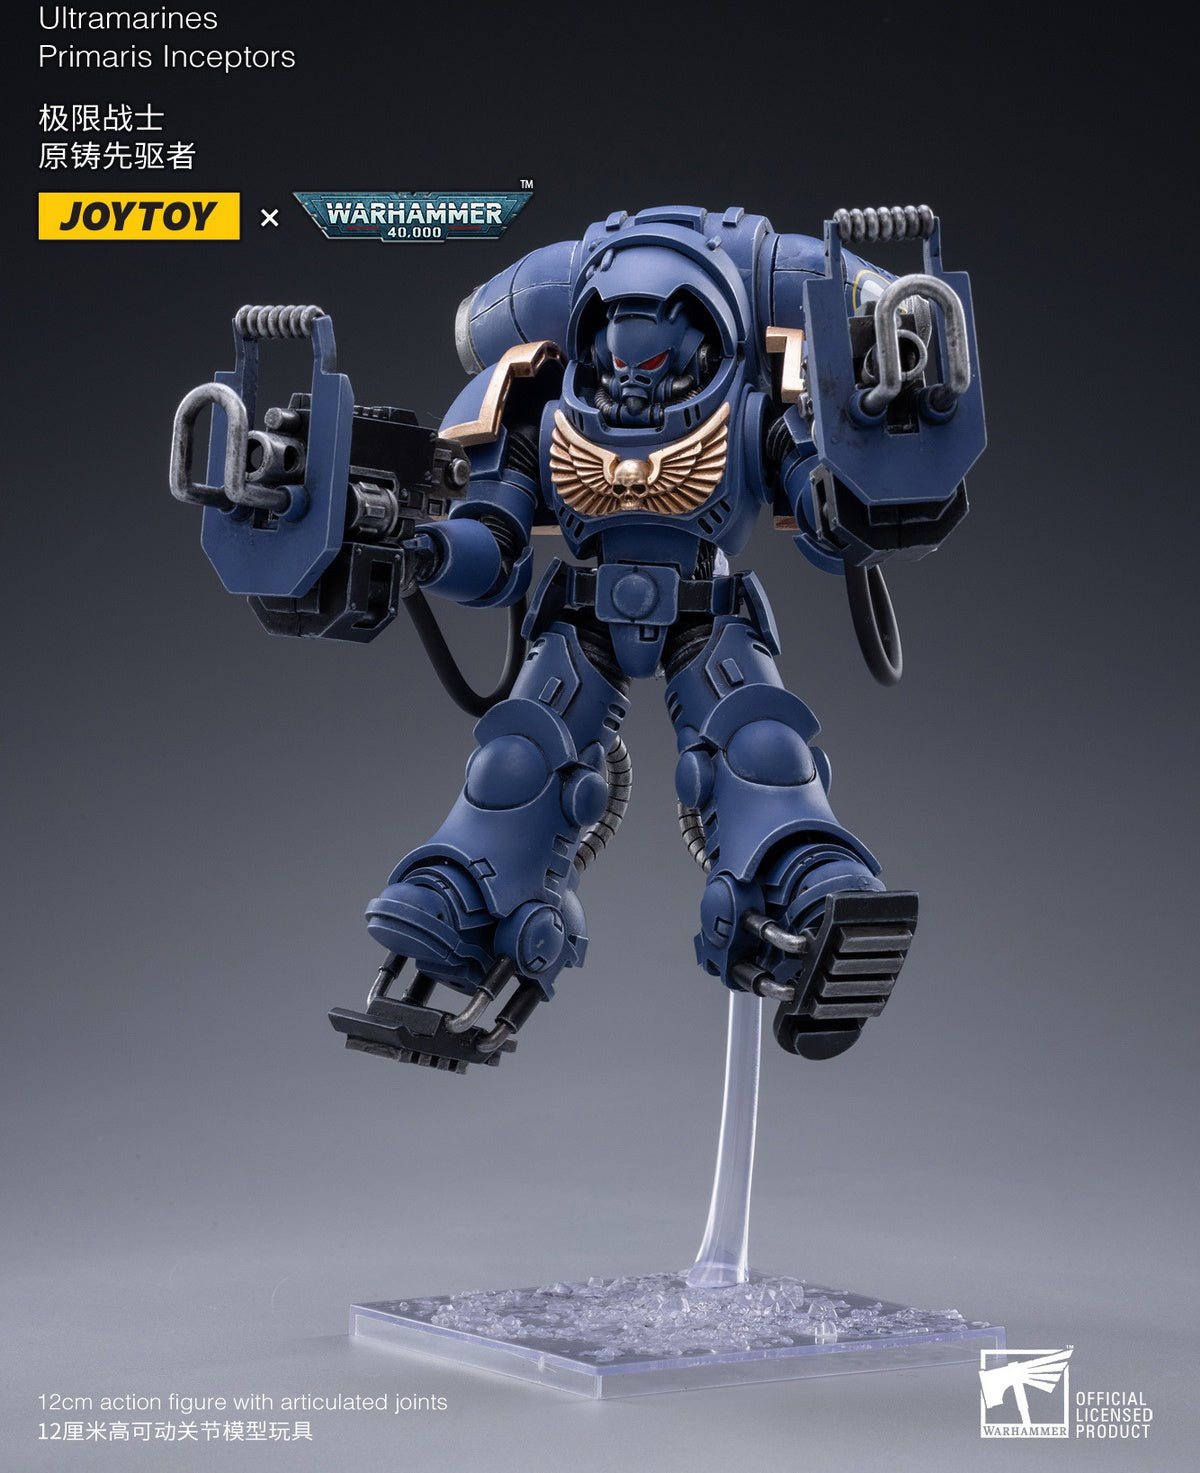 1/18 Joytoy x Warhammer 40000 Ultramarines Primaris Inceptors